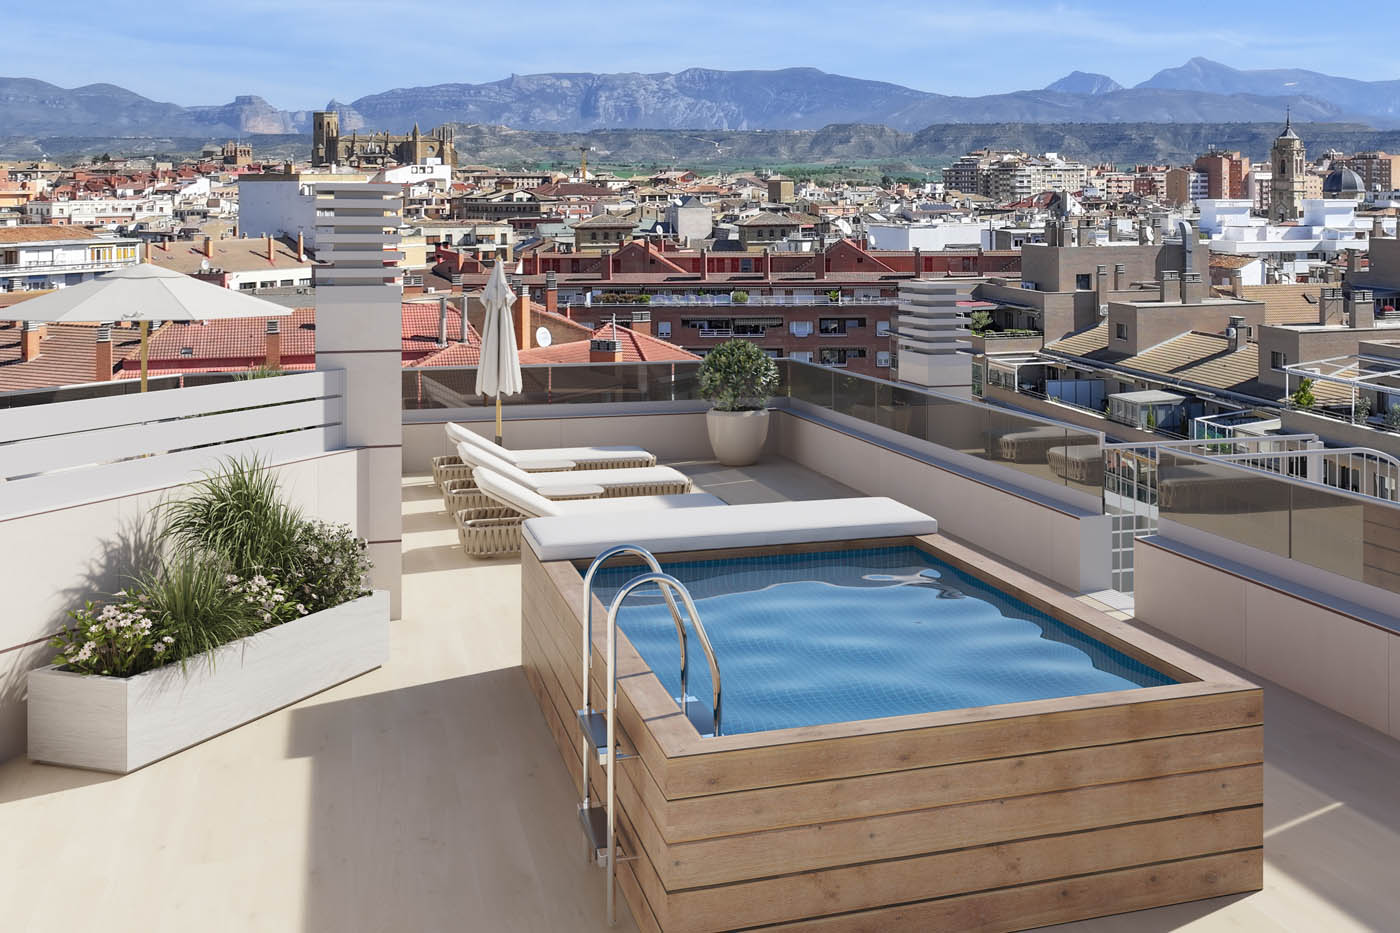 Renders 3D de terrazas en un edificio residencial en Huesca